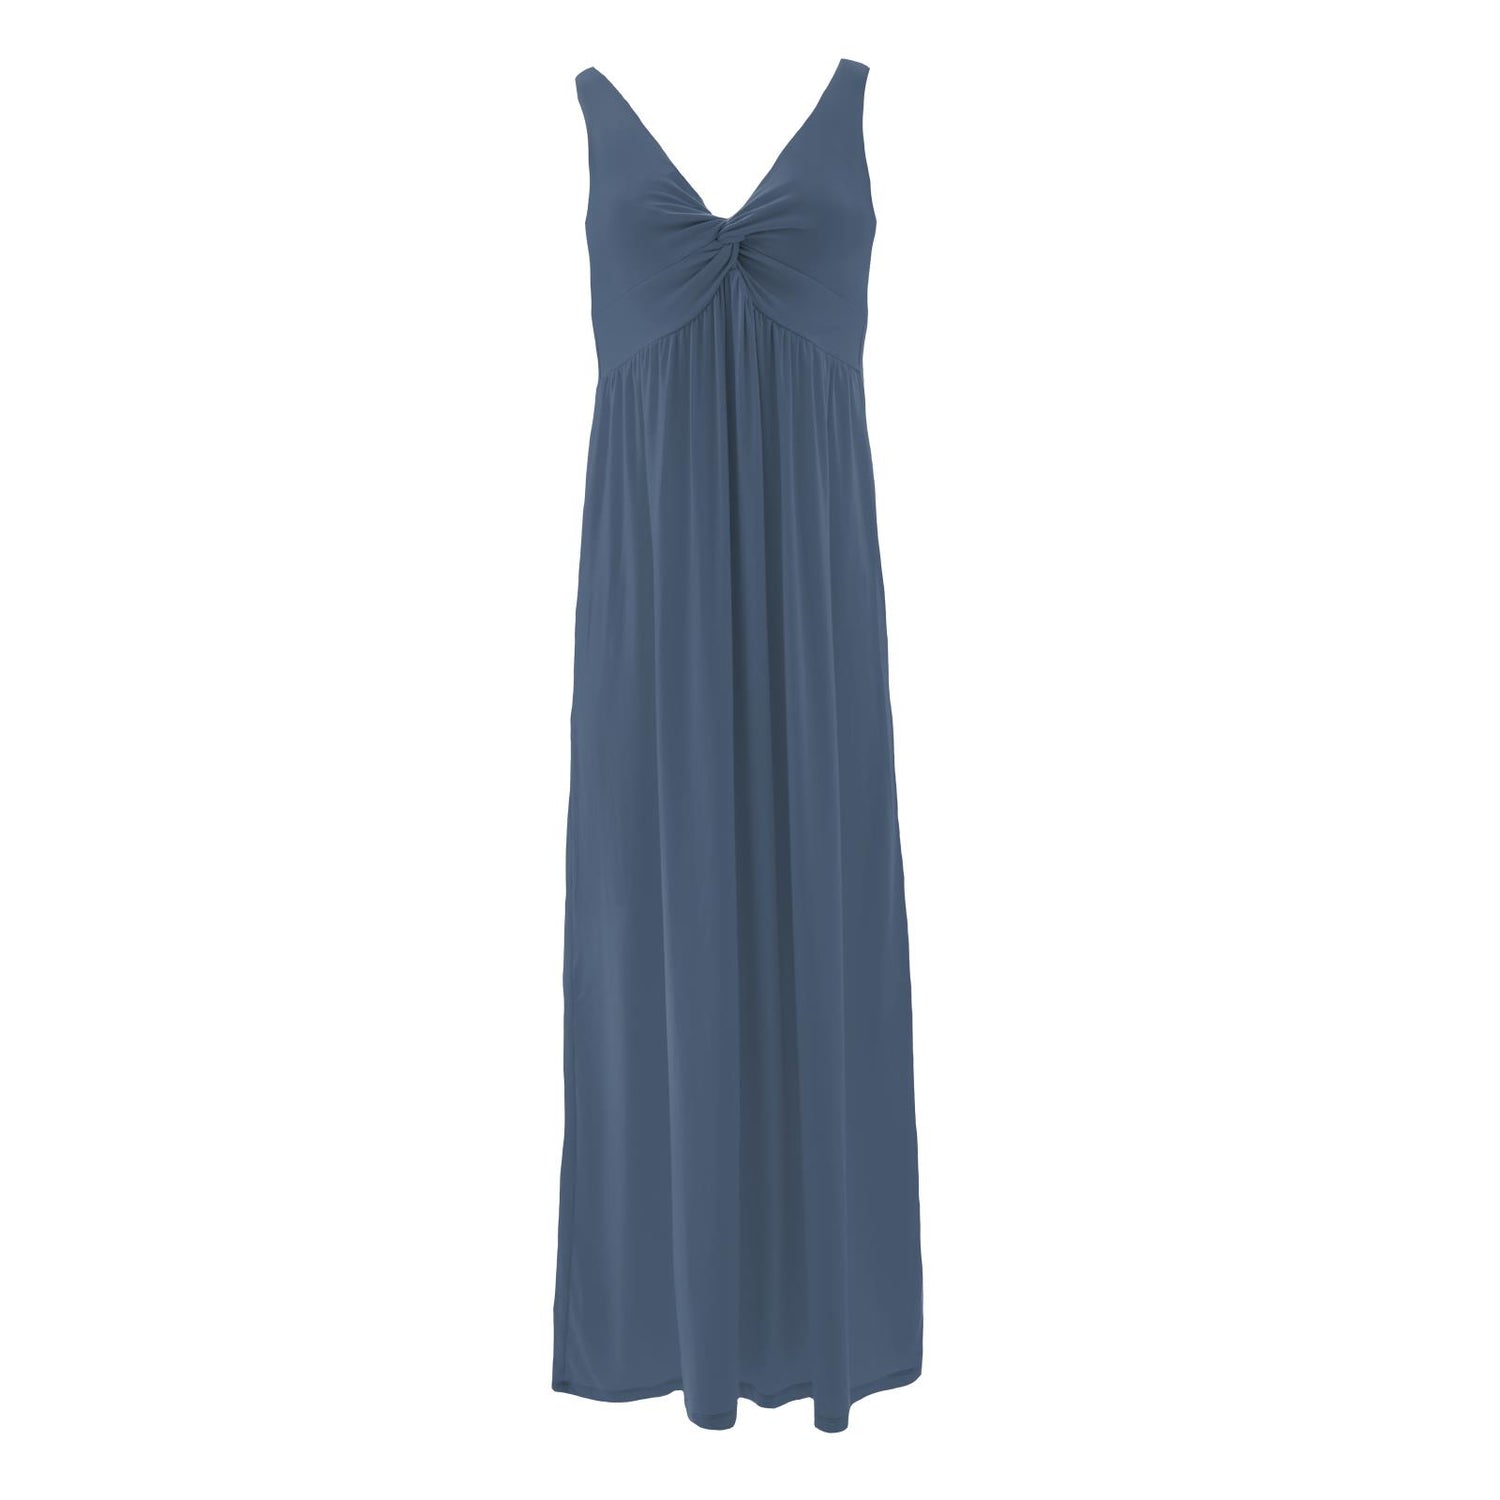 Women's Solid Simple Twist Nightgown in Deep Sea